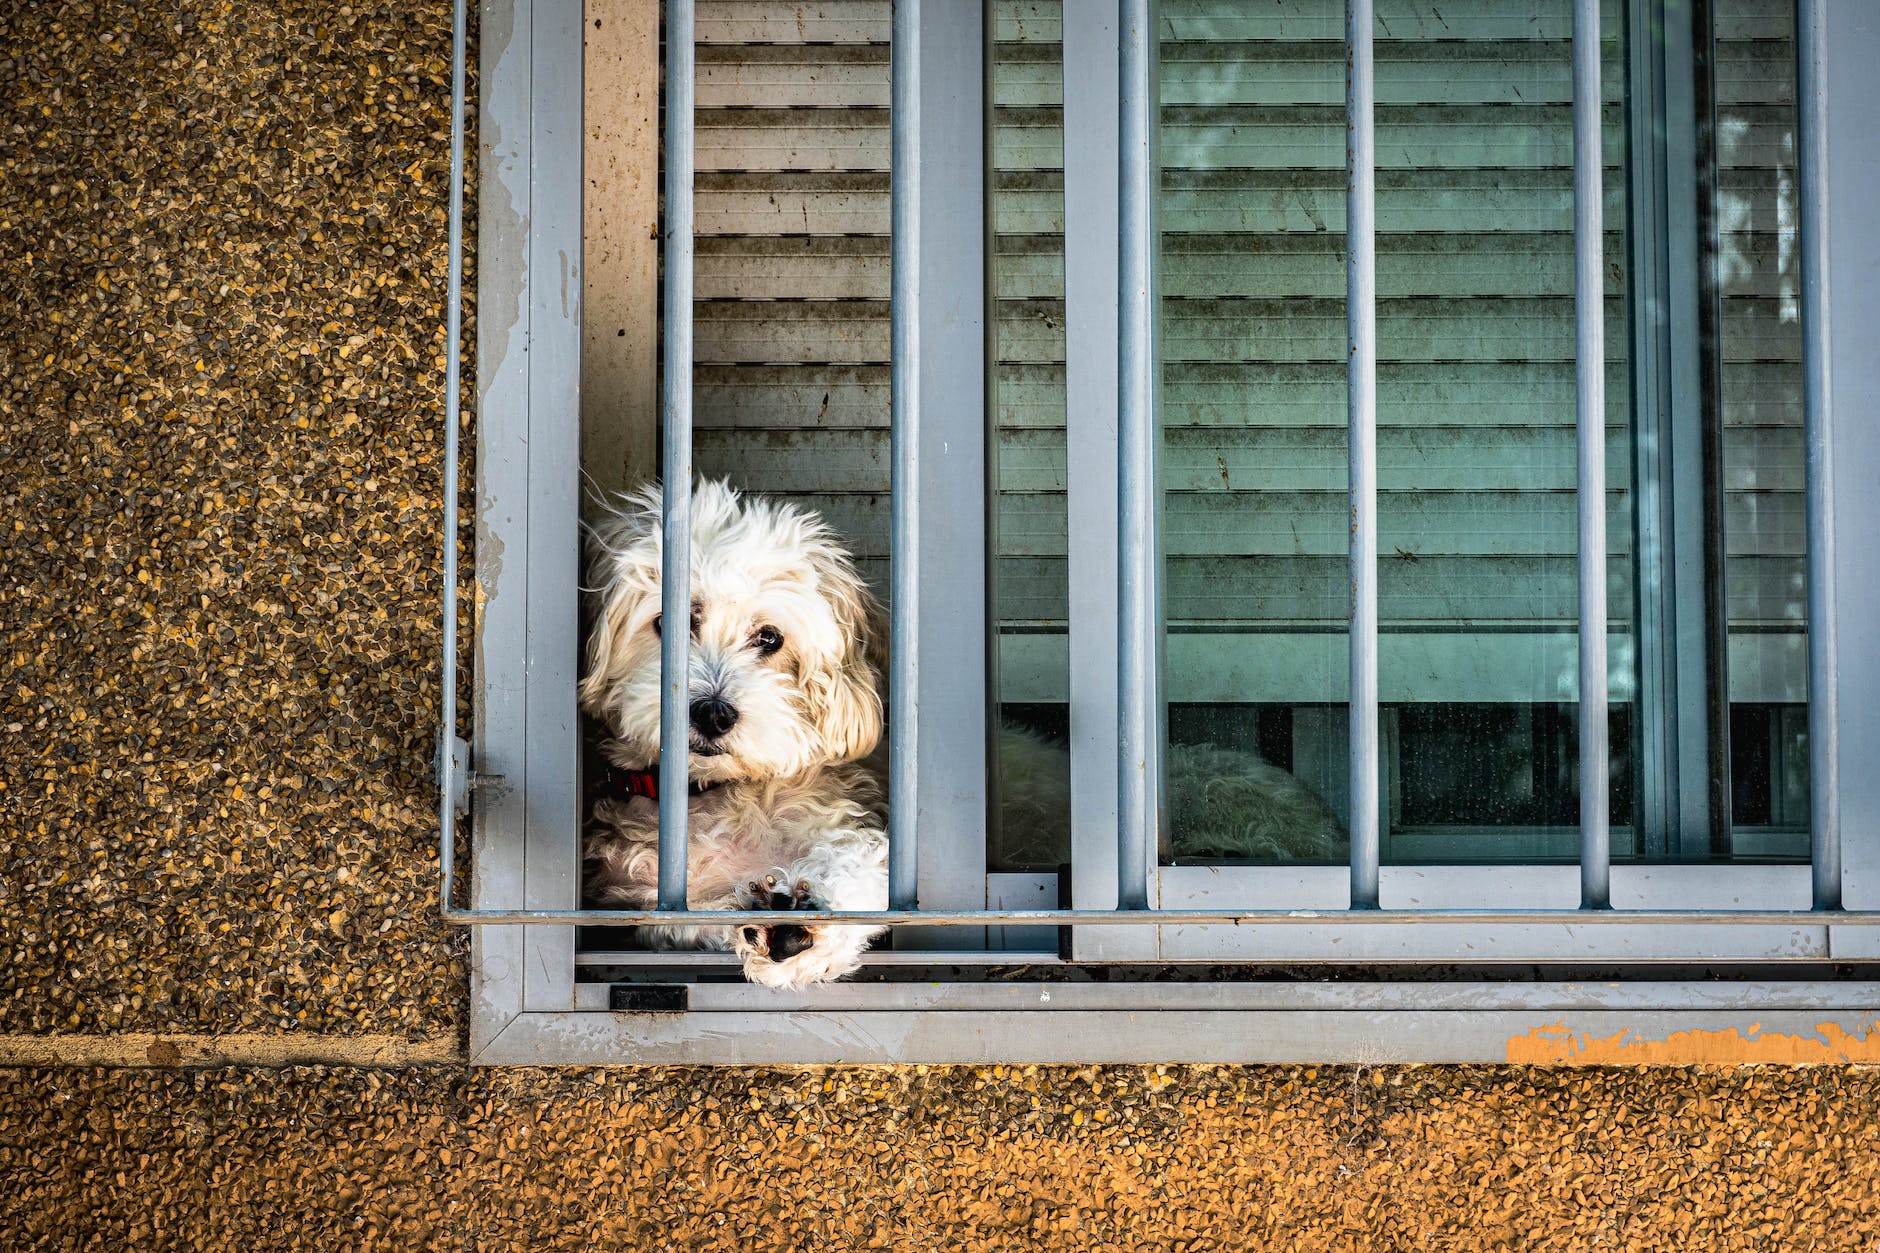 a puppy in a window